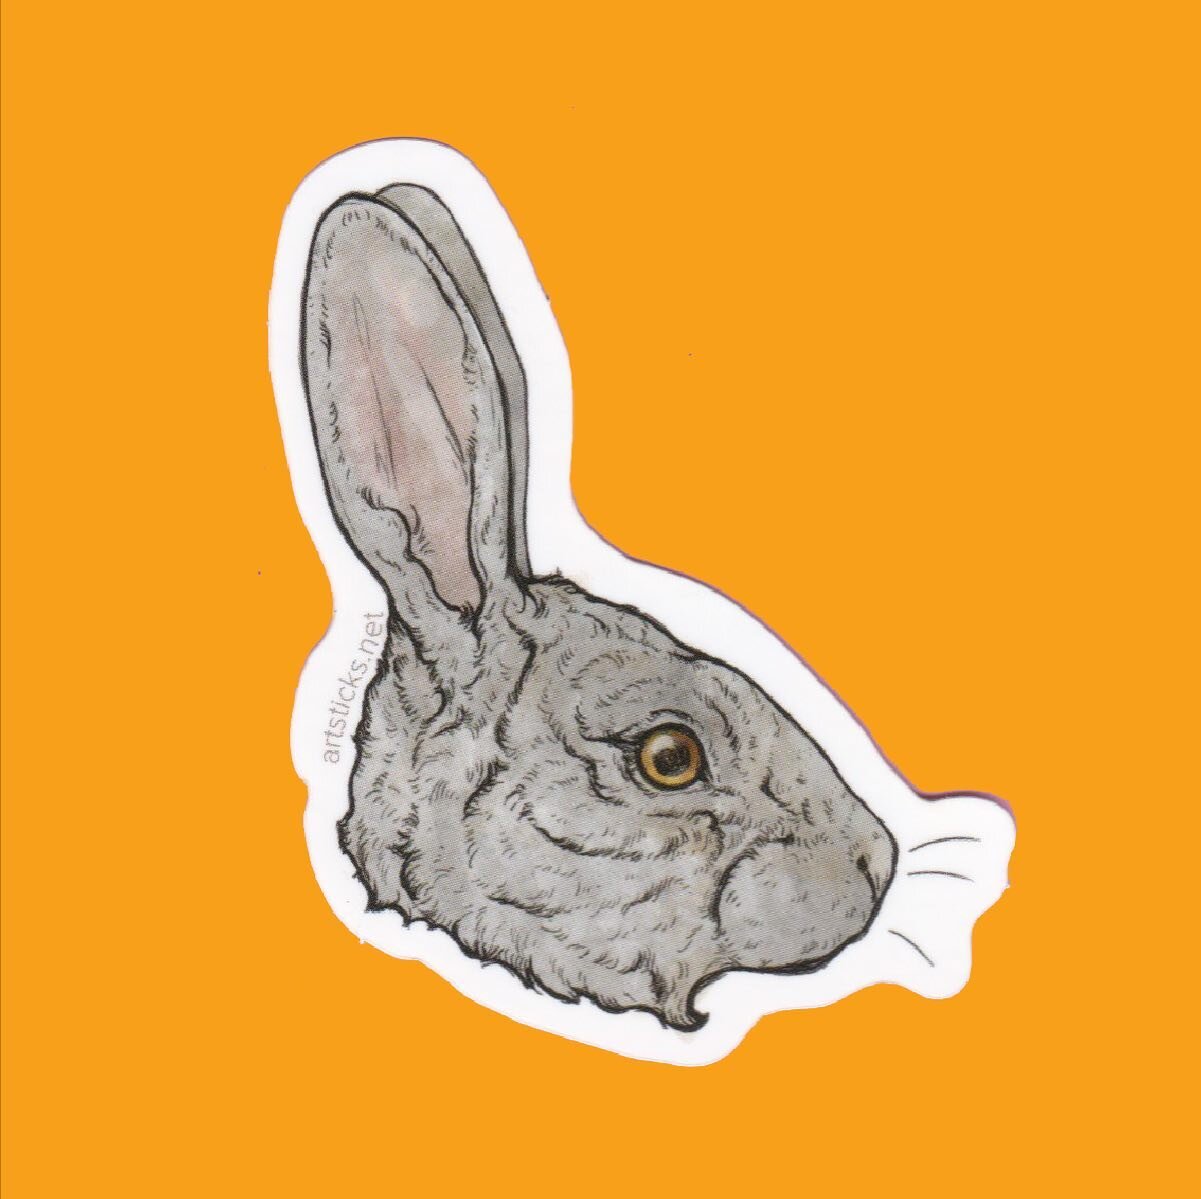 Seen any bunnies lately?? 🐰 Sticker from Series 8 artist @aerica.raven 

Find a vending machine near you!

#rabbit #bunny #bunnyrabbit #bunnylove #sticker #stickers #stickershop #stickerart #art #artwork #boulder #bouldercolorado #colorado #colorado